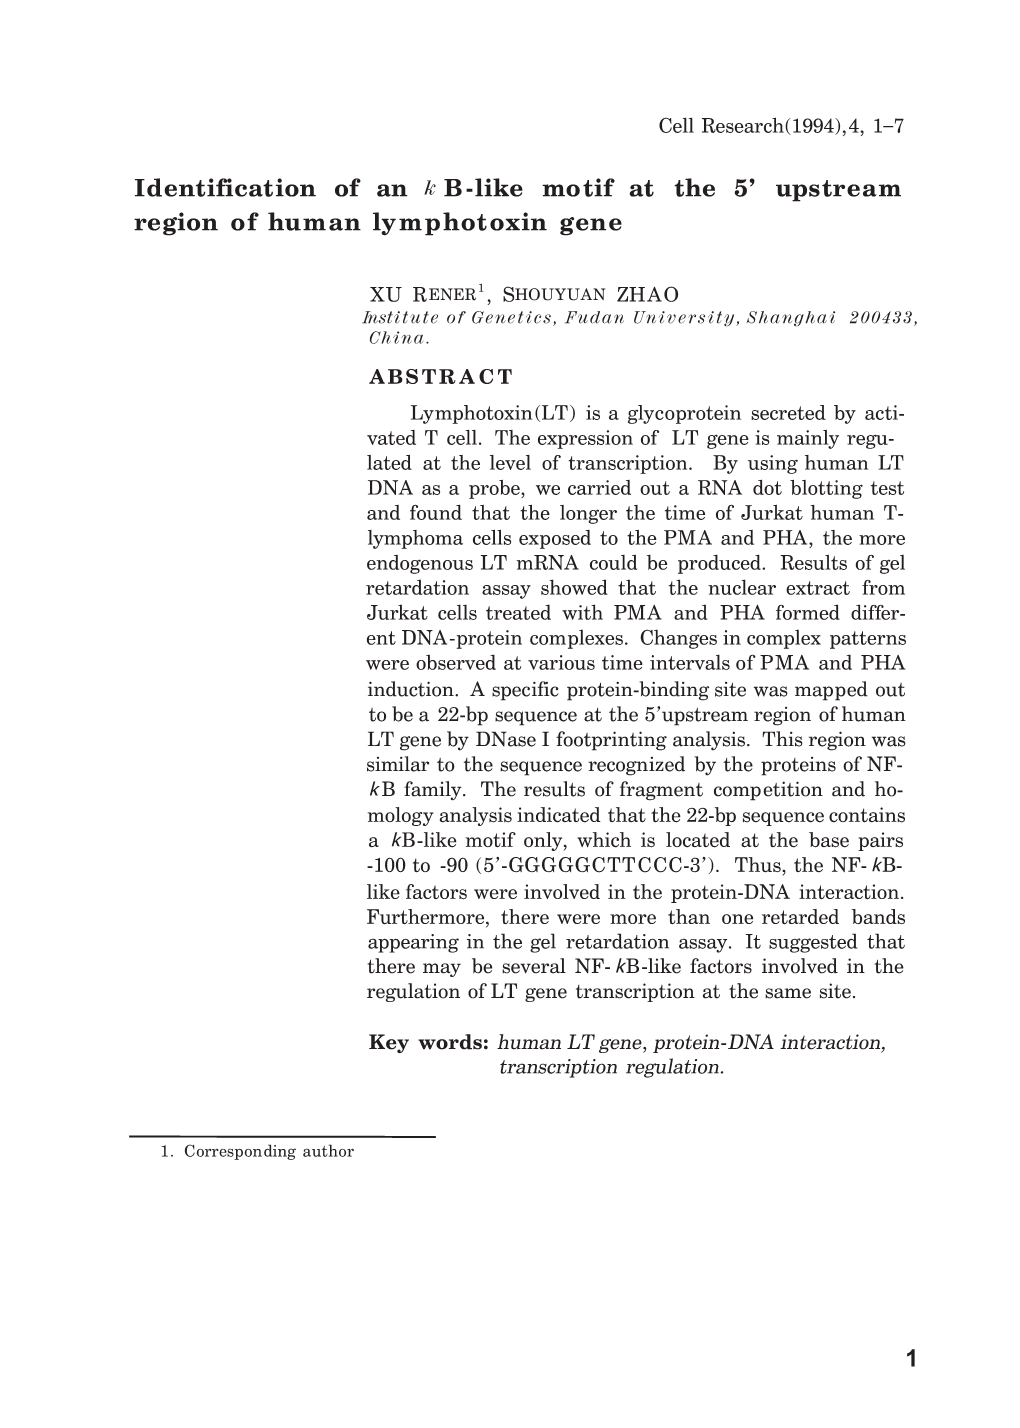 1 Identification of an K B-Like Motif at the 5' Upstream Region O F Human Lymphotoxin Gene